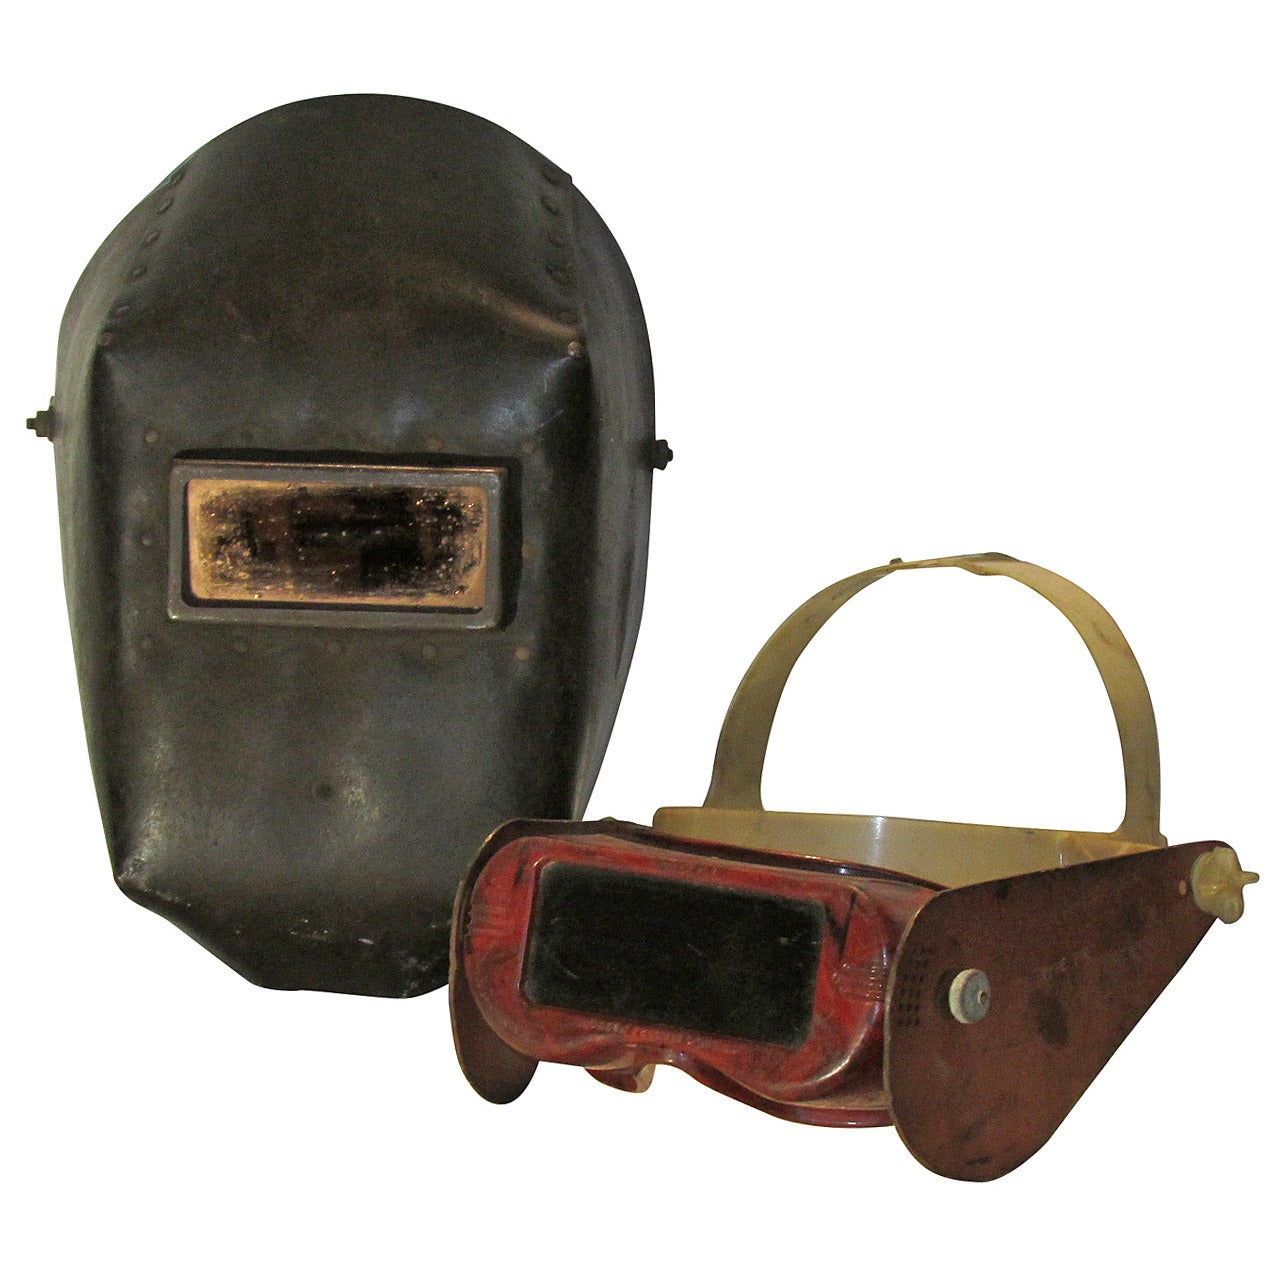 Vintage Industrial Welding Helmet and Goggles